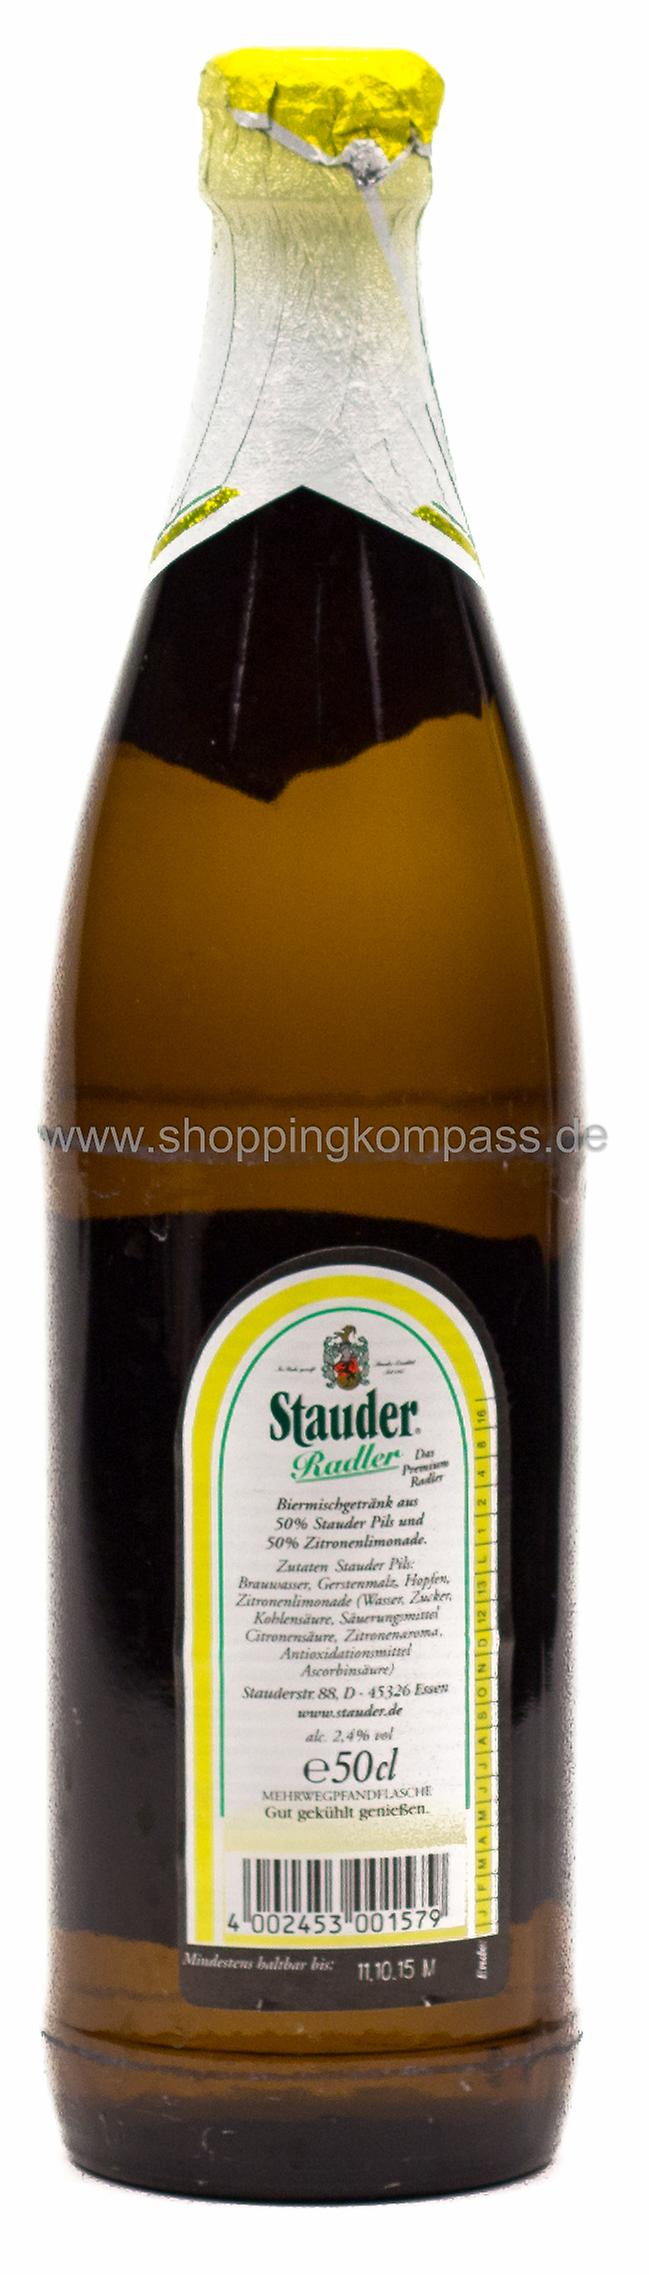 Stauder Radler 6 x 0,5 l Glas Mehrweg